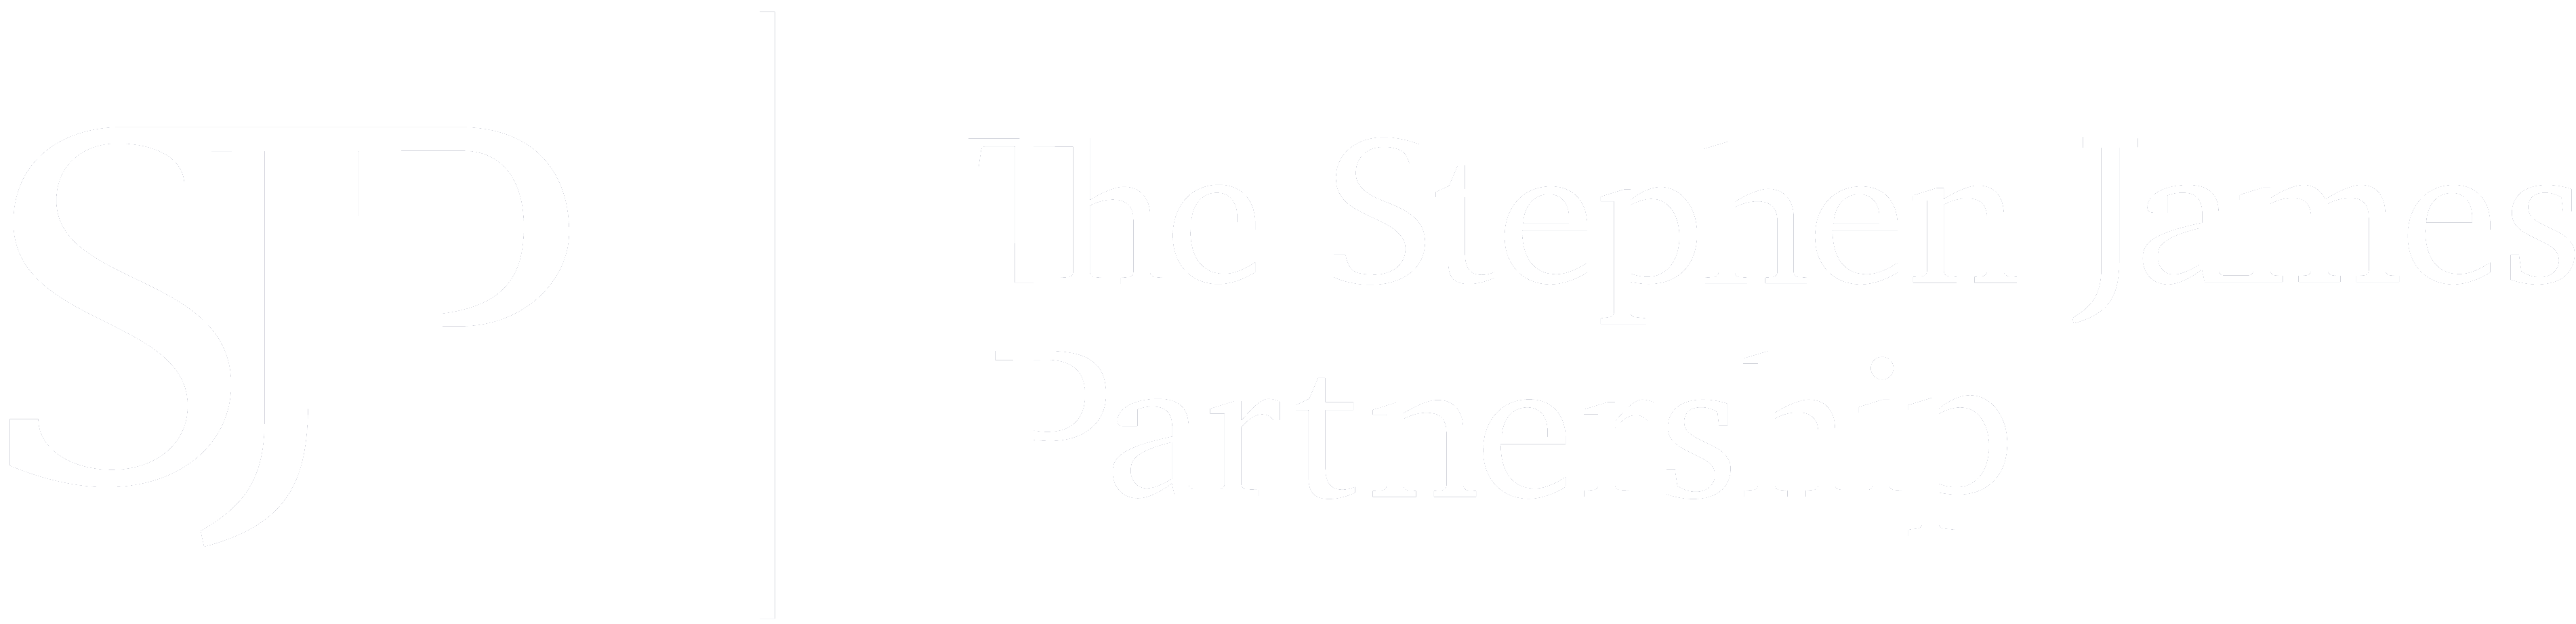 Stephen James Partnership